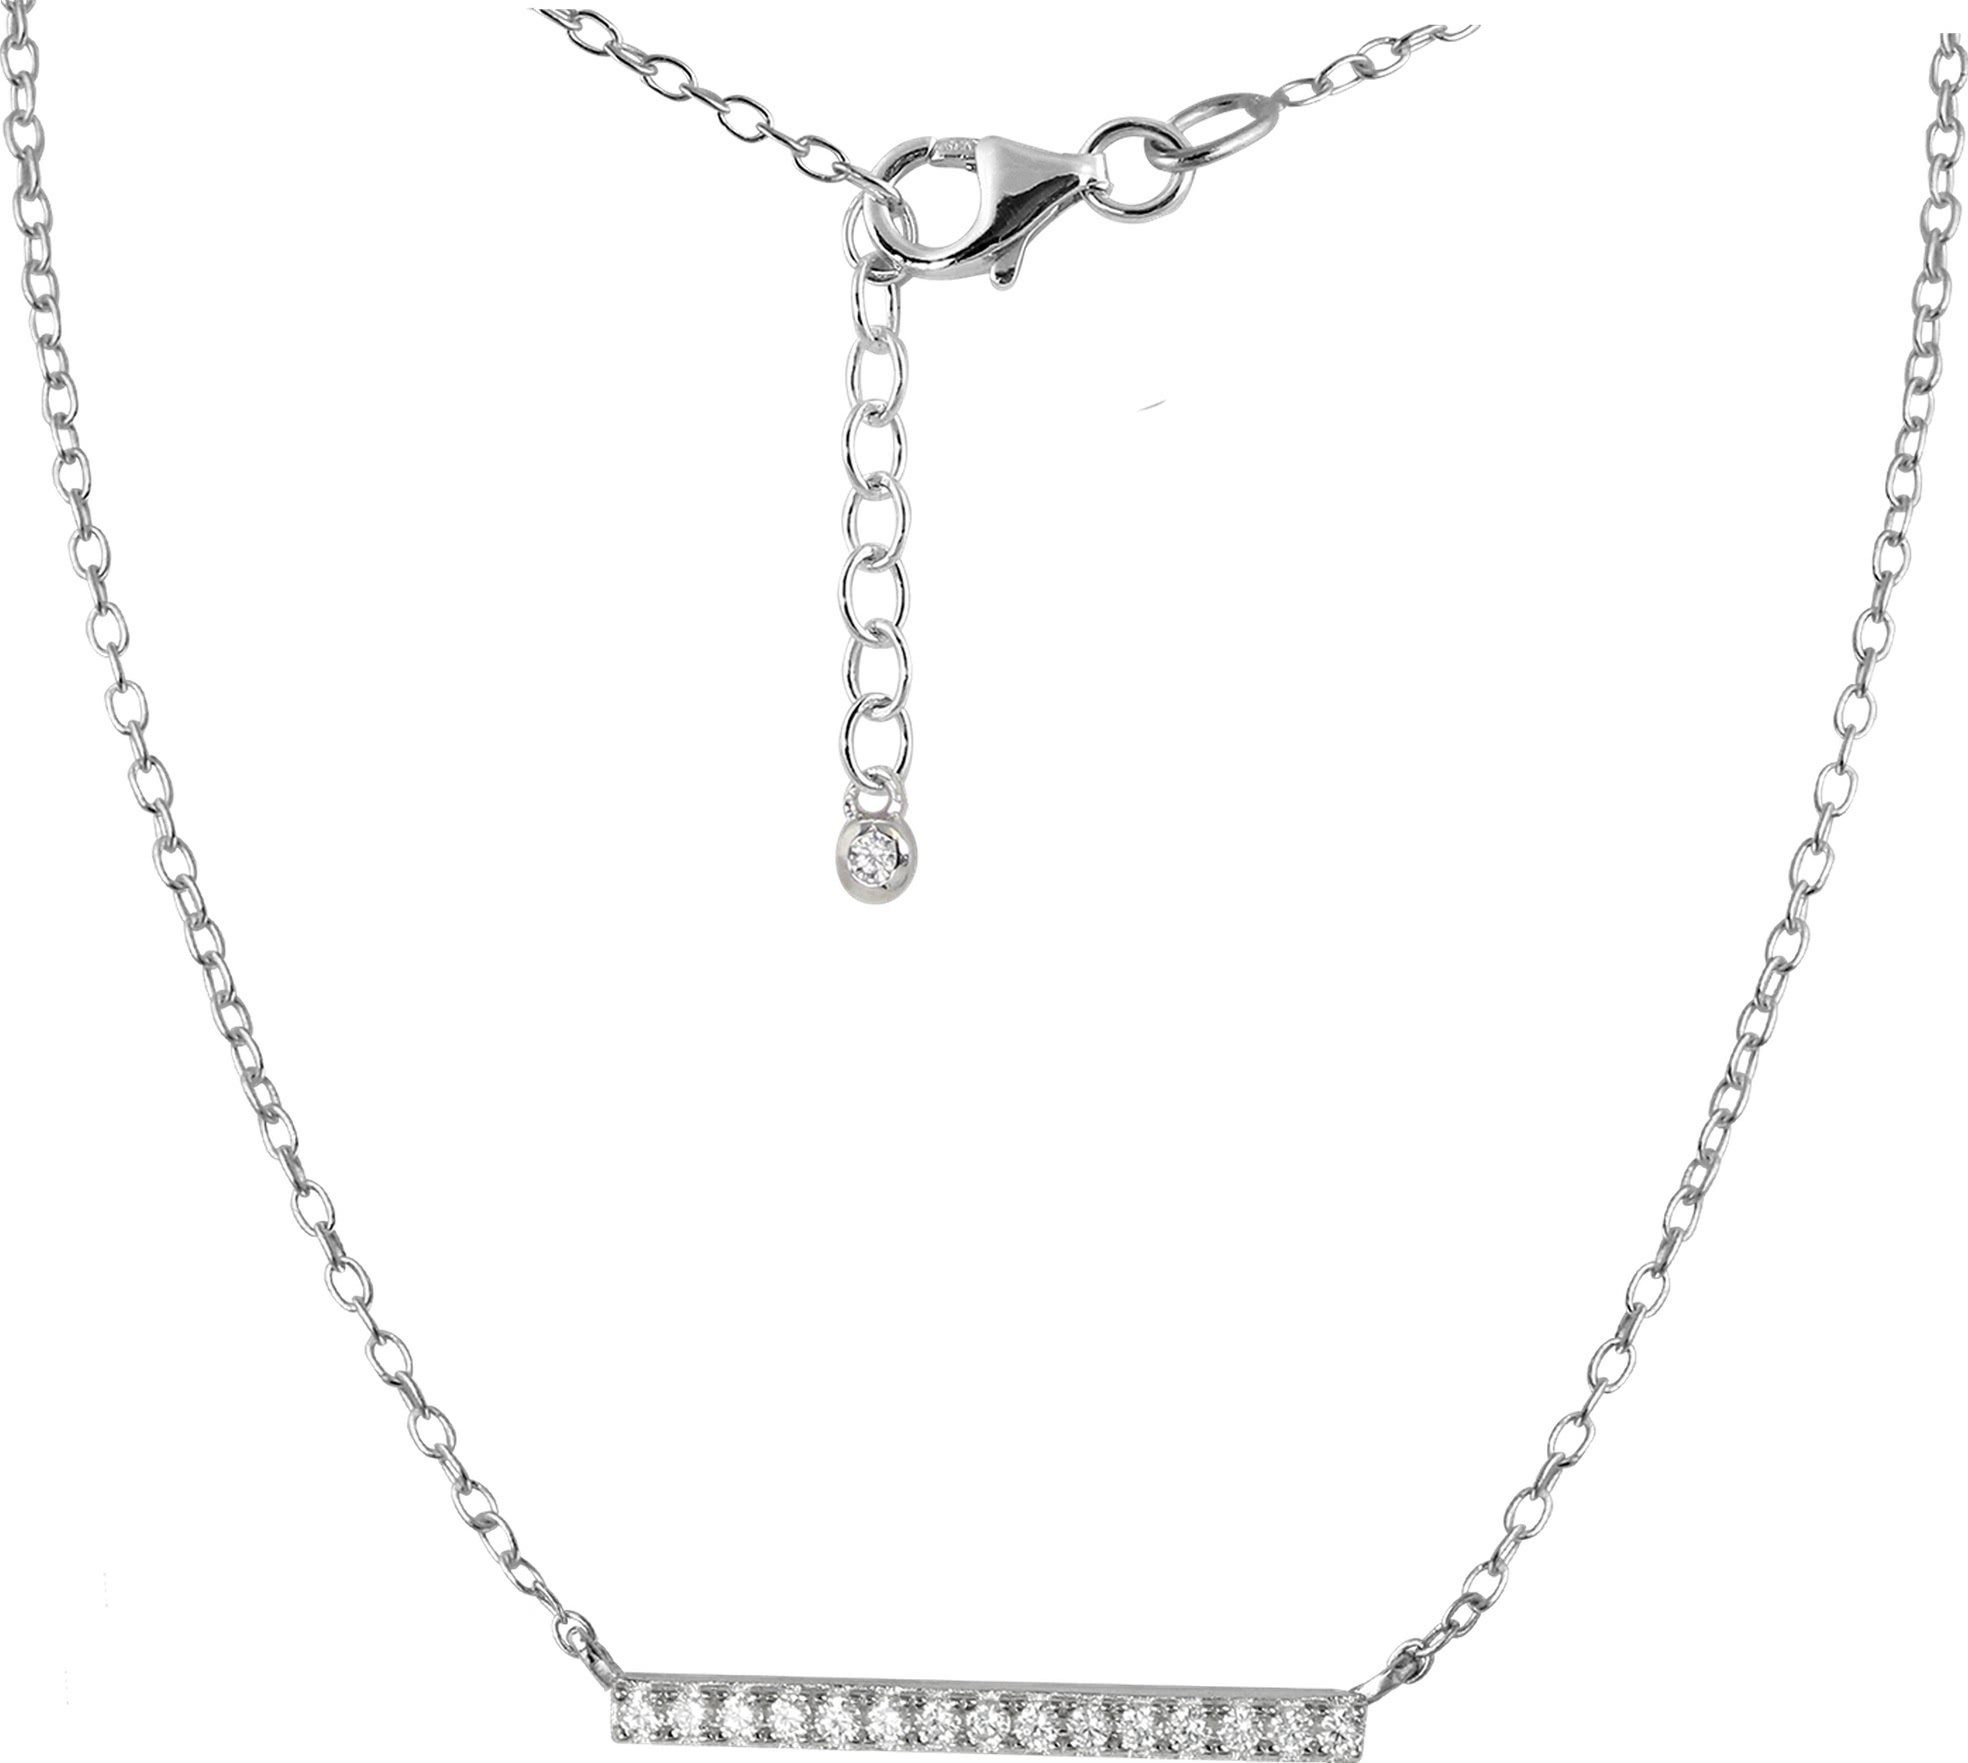 Farbe: Sterling (Glamour) Zirkonia Halsketten 925 ca. SilberDream 45cm, Schmuck, GSK4901WX Silberkette Halskette silber SilberDream Silber,